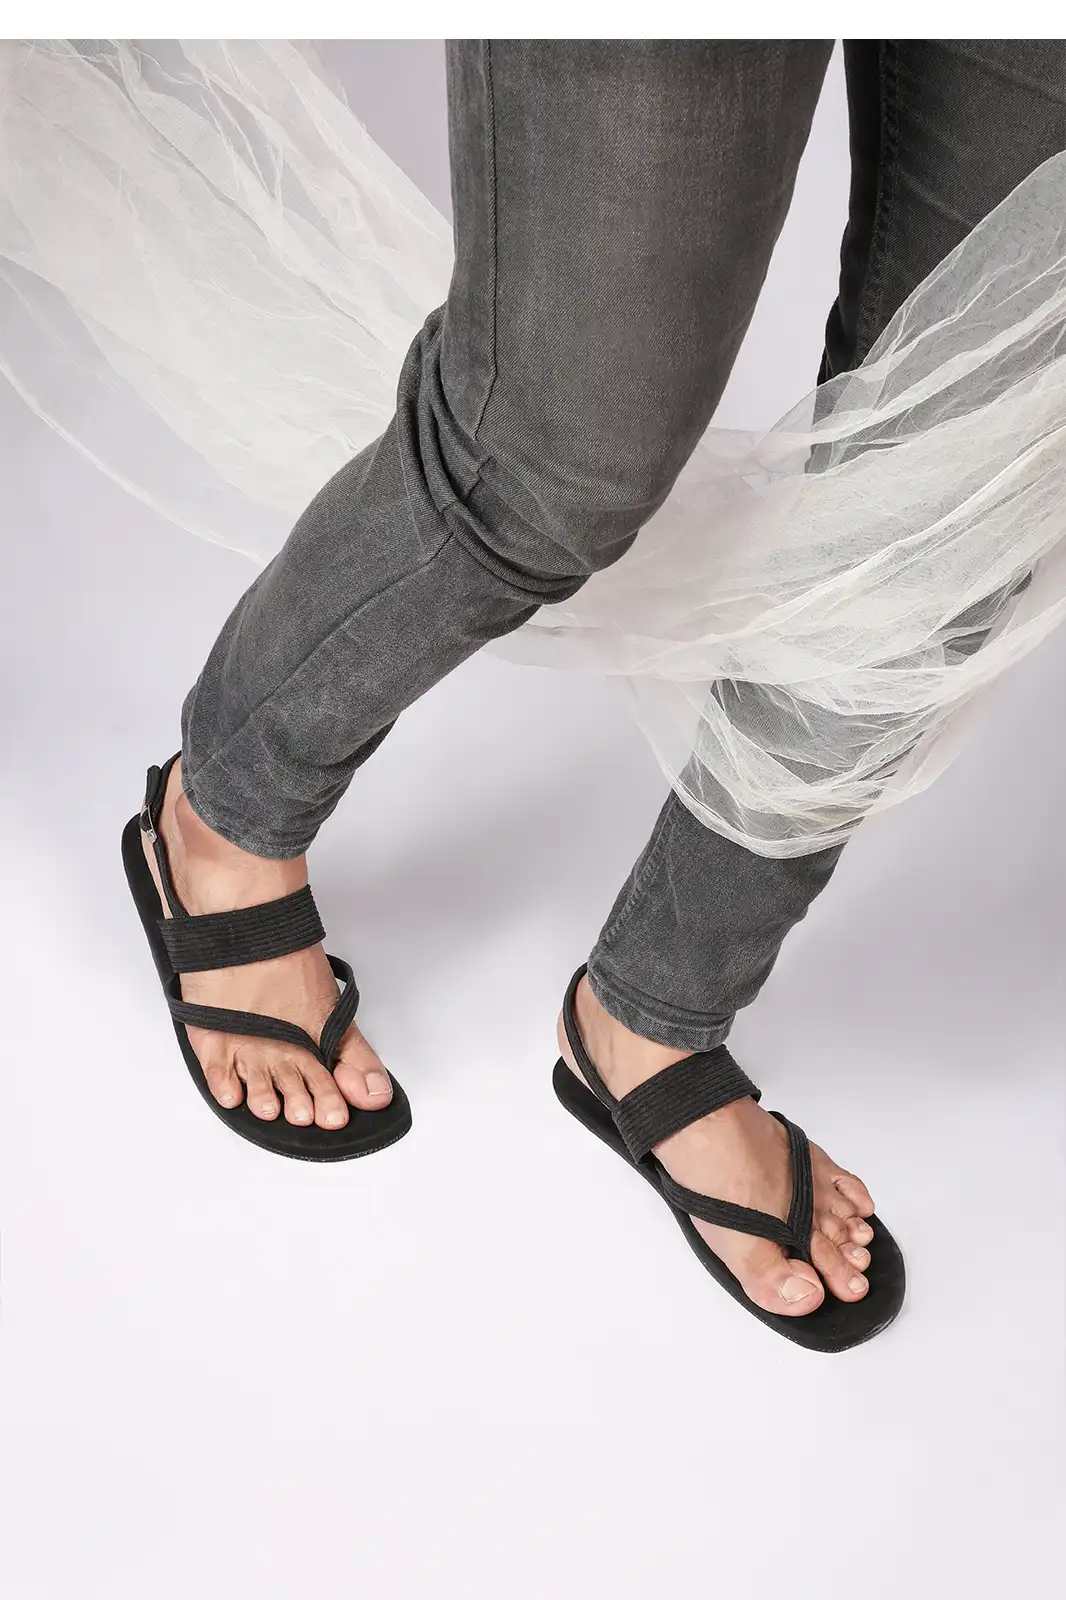 Dolce & Gabbana Flat Sandals for Men sale - discounted price | FASHIOLA.in-sgquangbinhtourist.com.vn